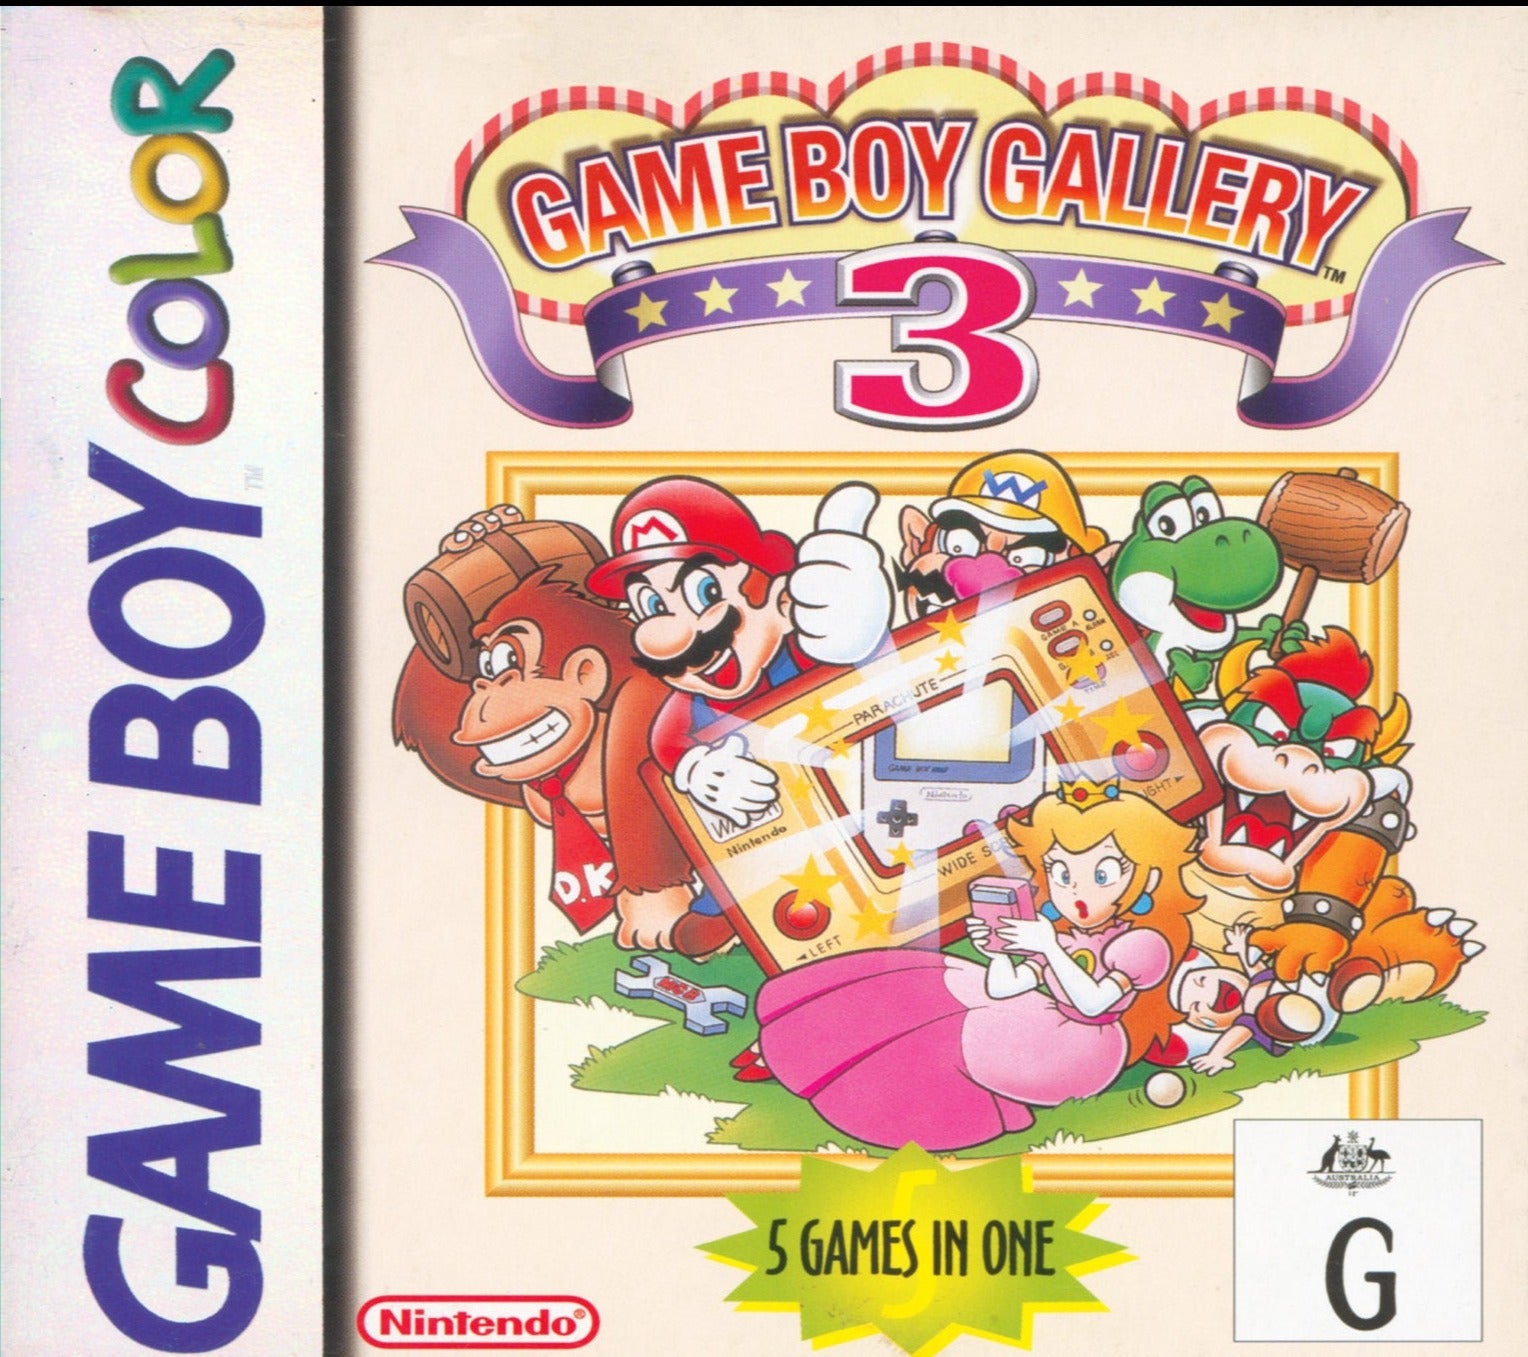 Game | Nintendo Game Boy Color GBC | Game Boy Gallery 3